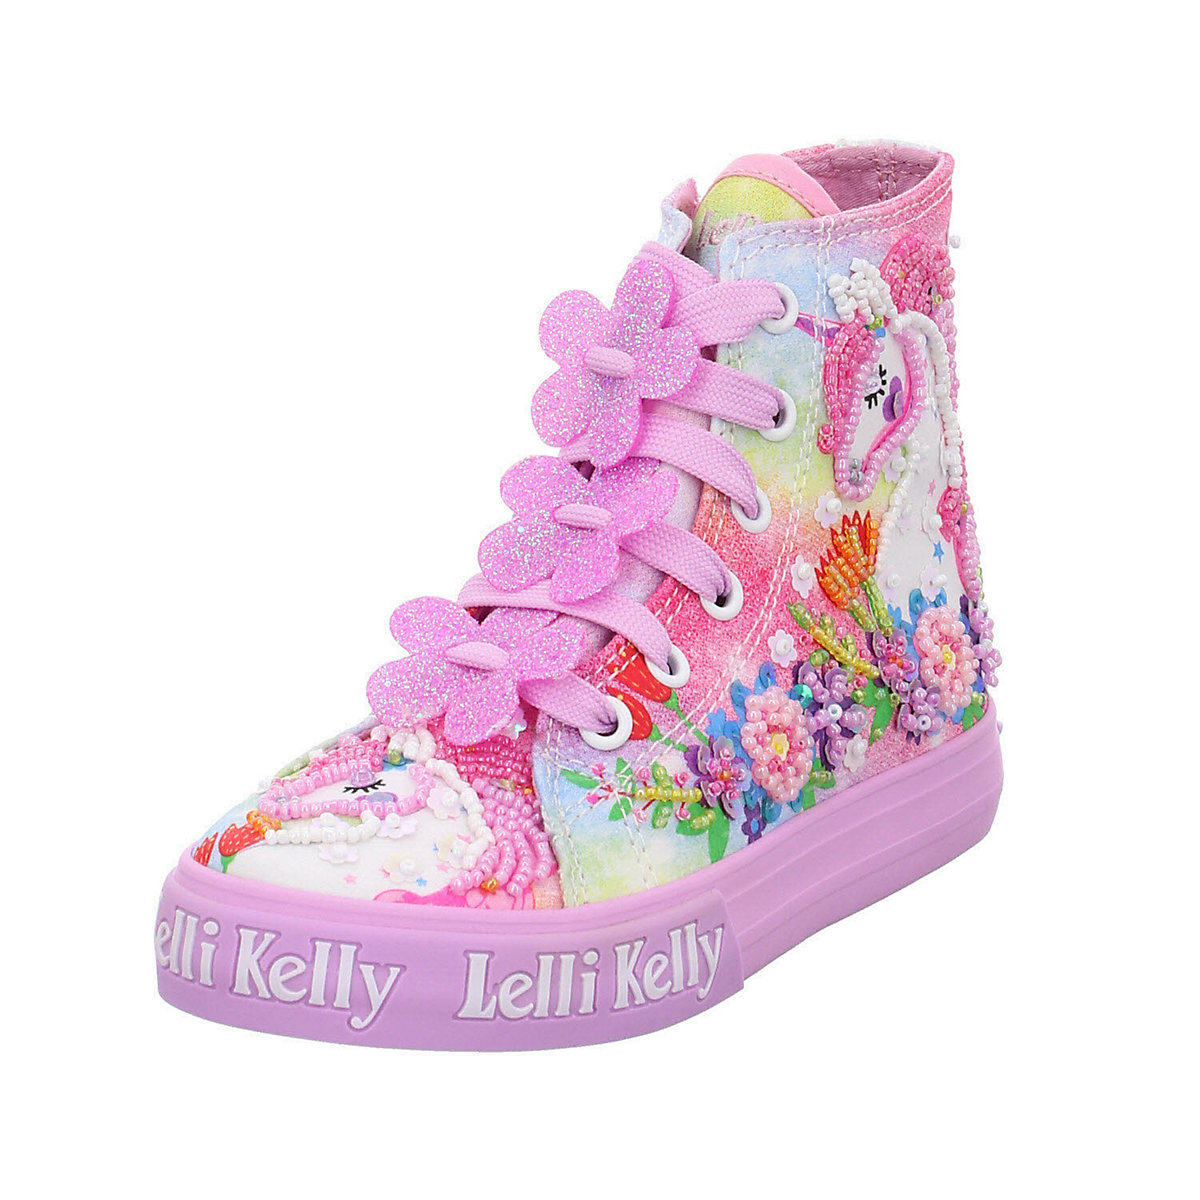 Lelli Kelly Mädchen Sneaker Schuhe Unicorn Sneaker Kinderschuhe Textil geblümt Halbschuhe rot/lila